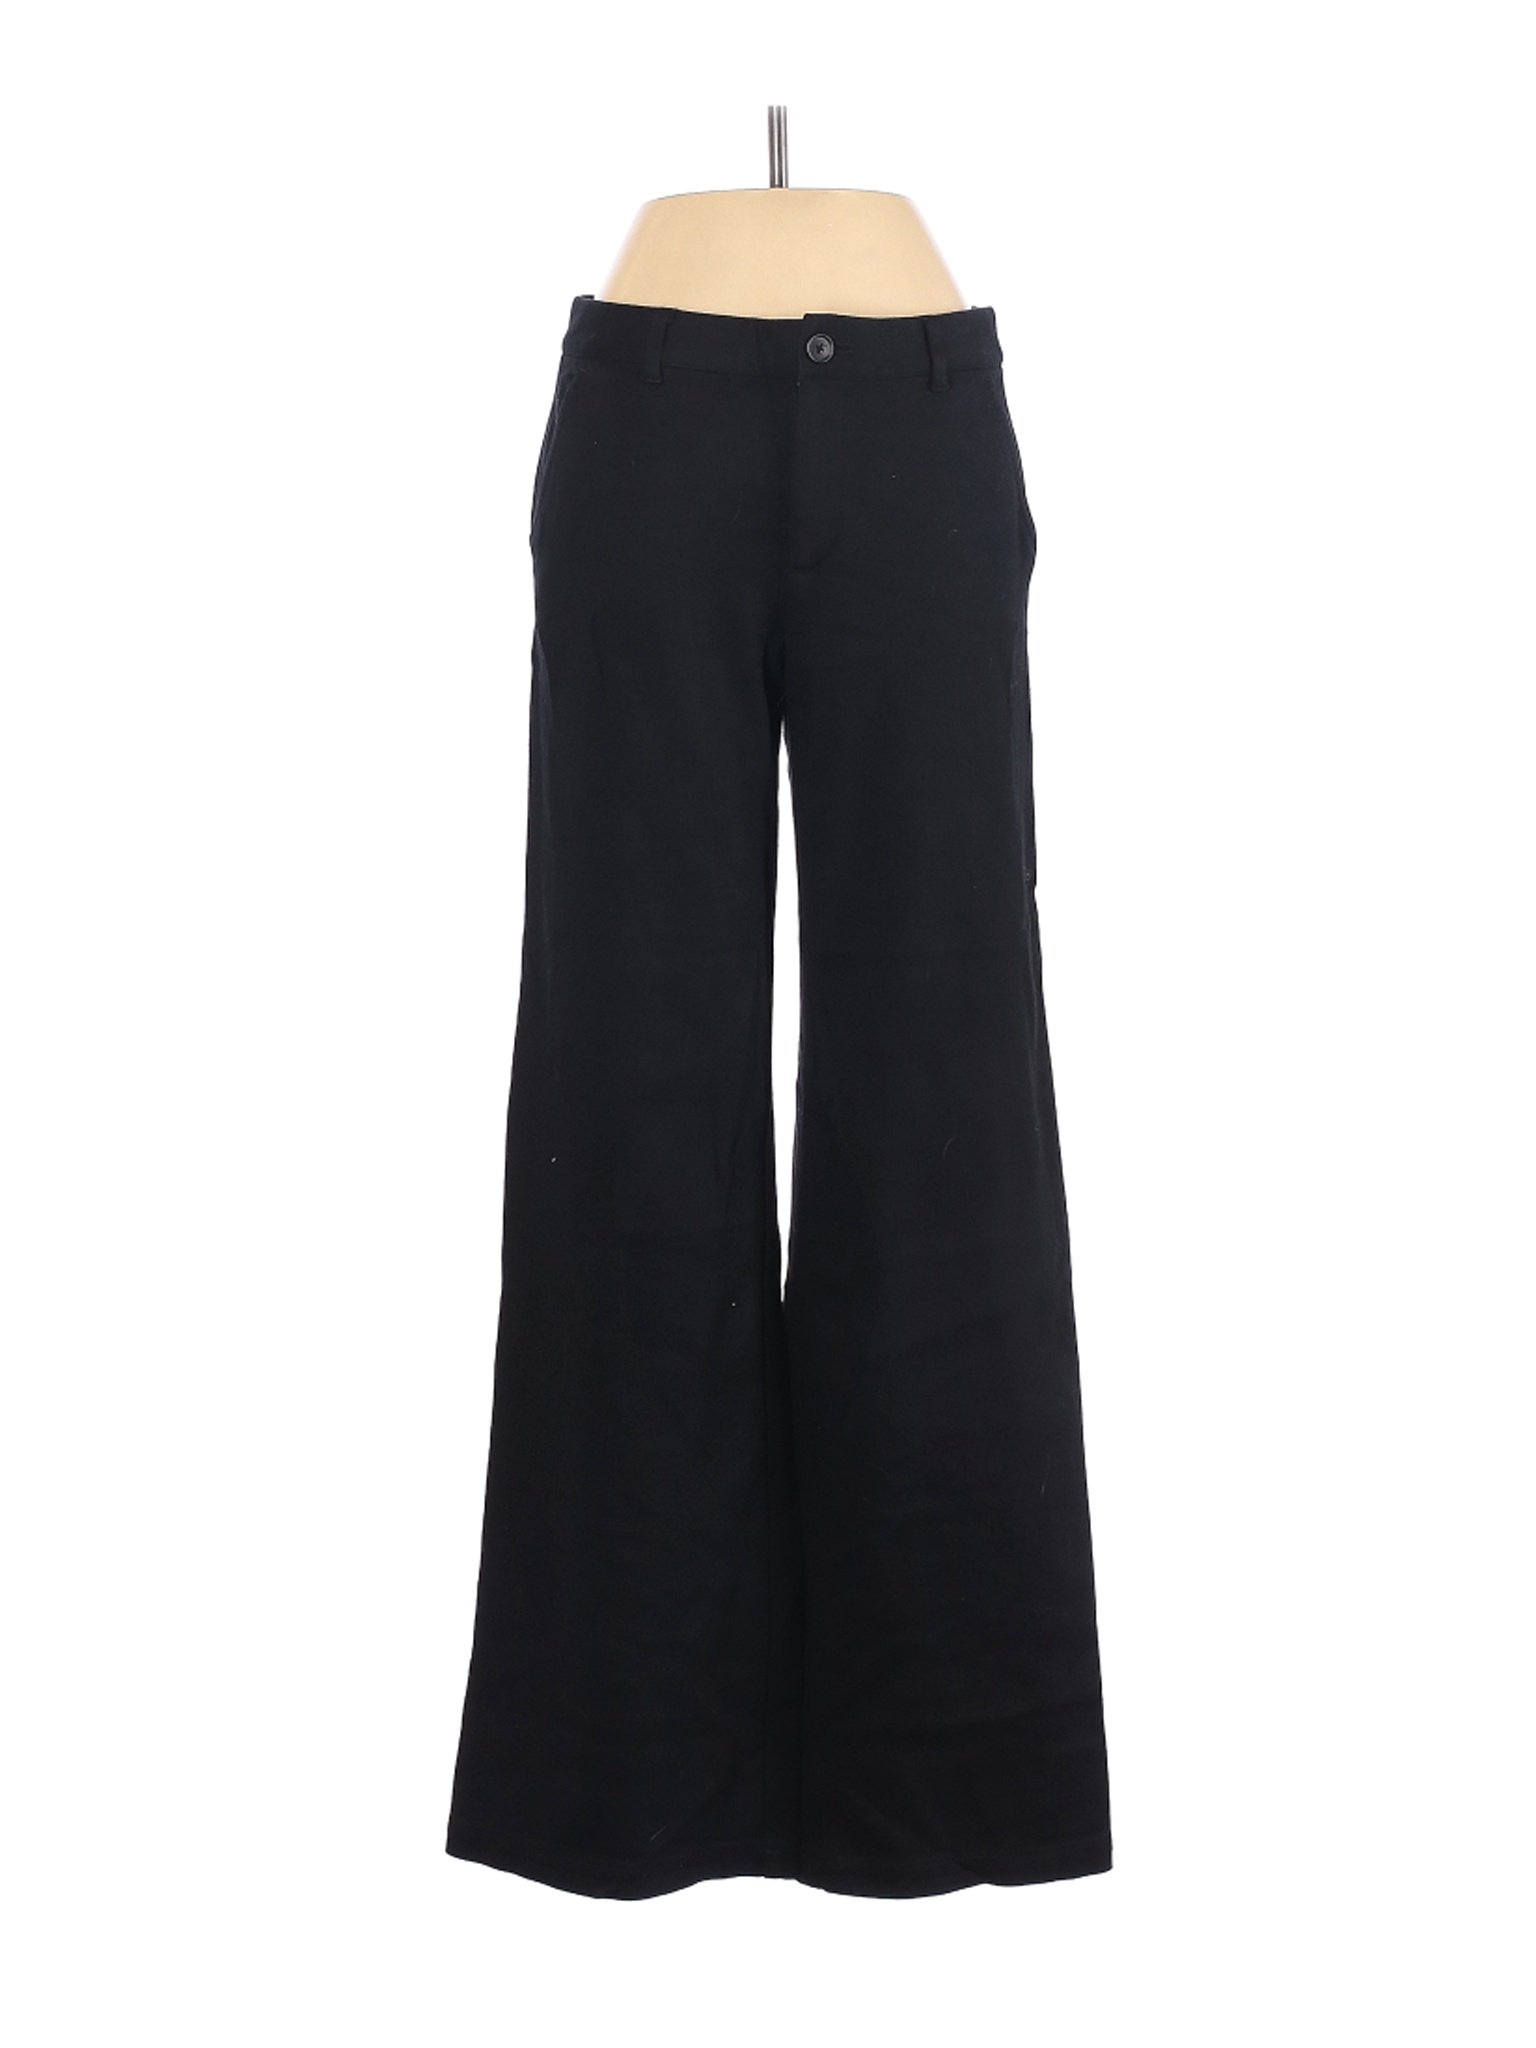 Gap Women Black Casual Pants 2 | eBay